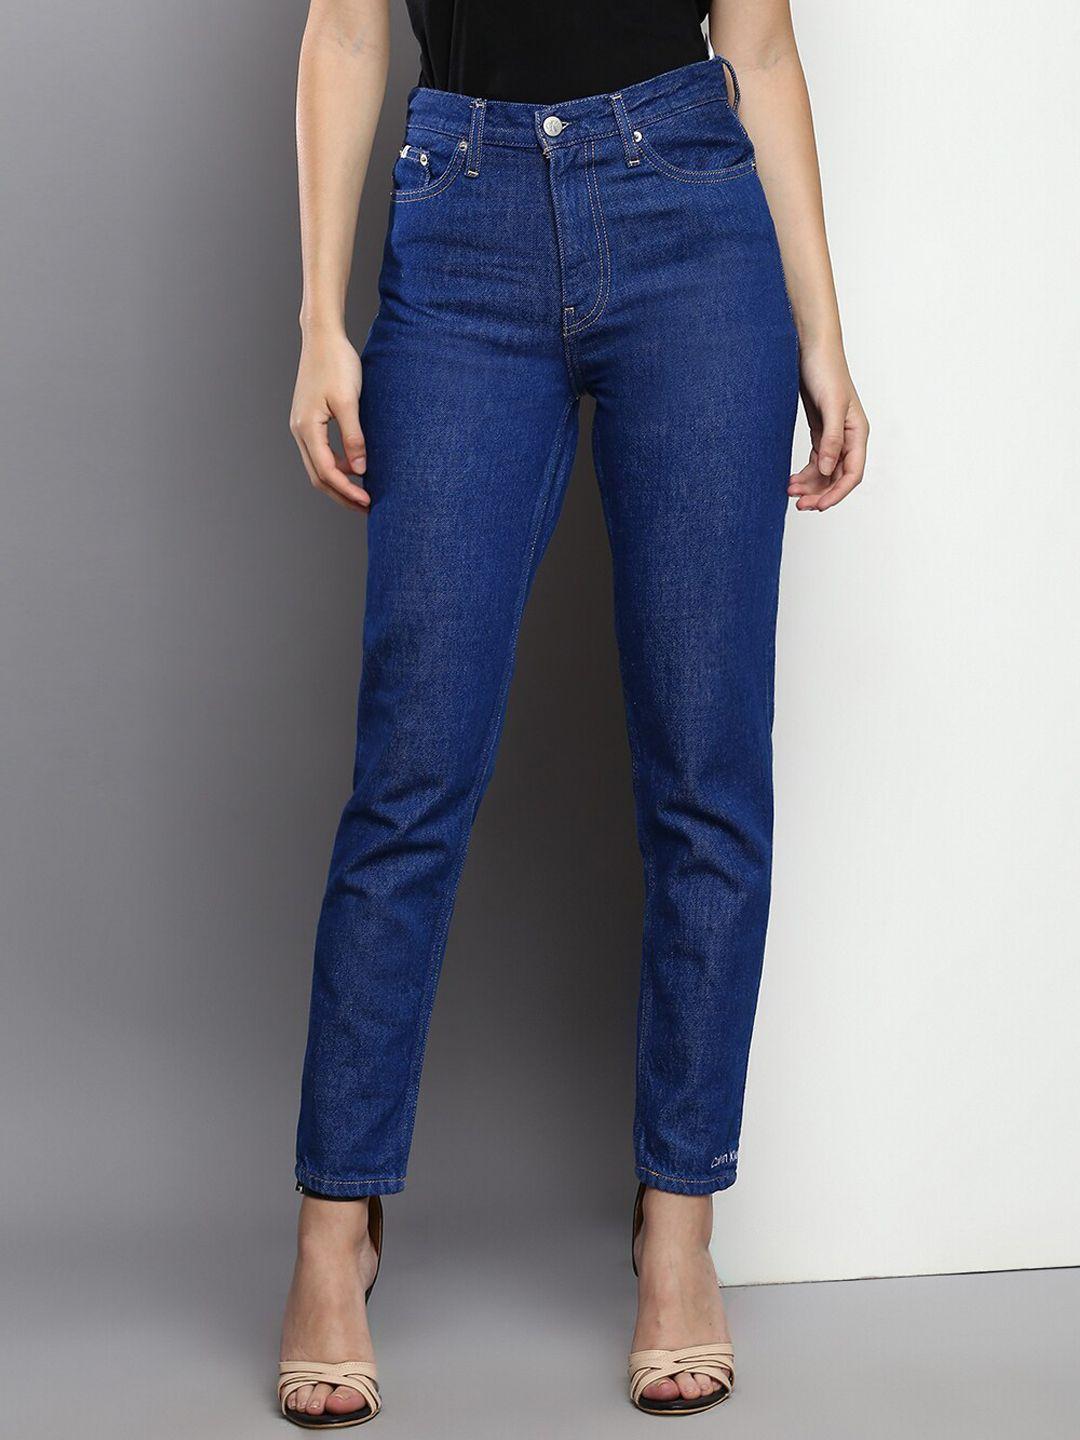 calvin klein jeans women regular fit jeans